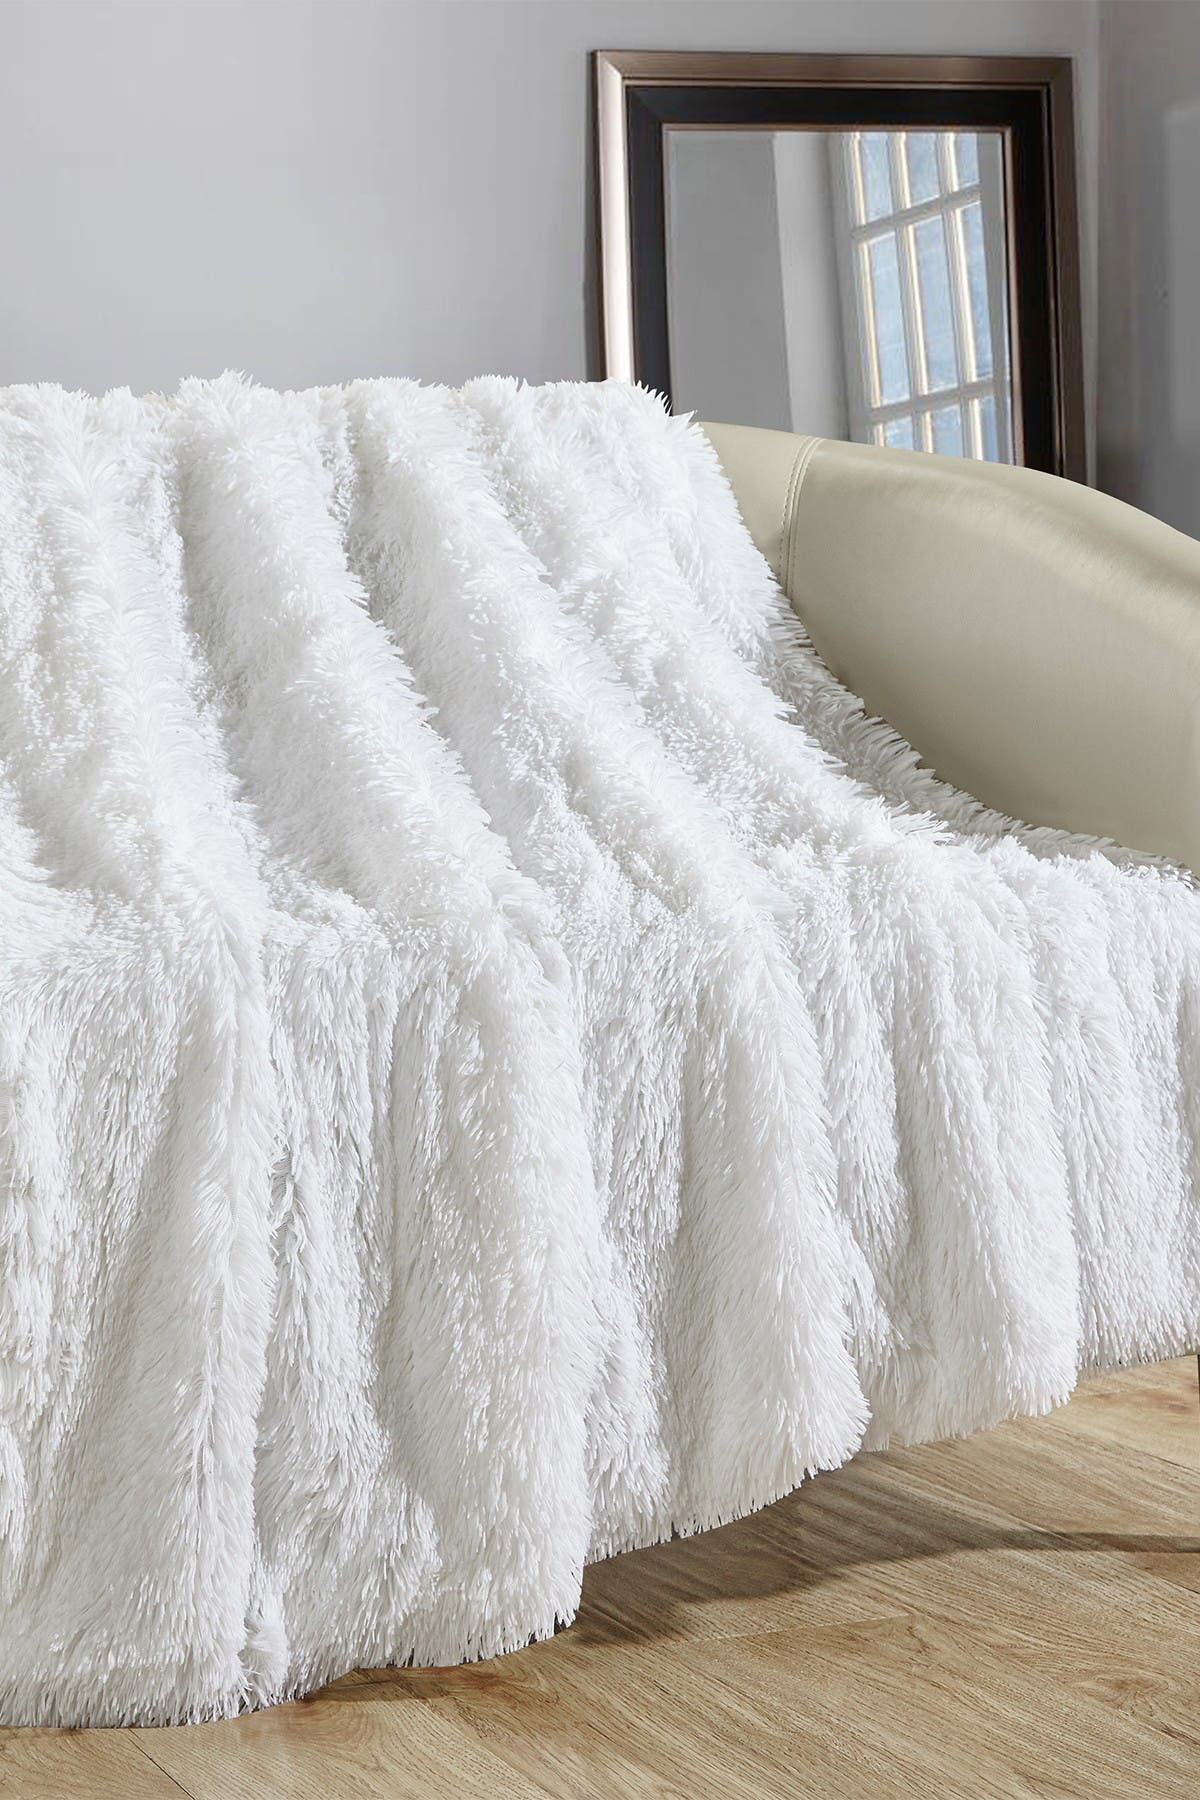 Chic Home Bedding Alaska Shaggy Faux Fur Decorative Throw Blanket 50 X 60 White Nordstrom Rack